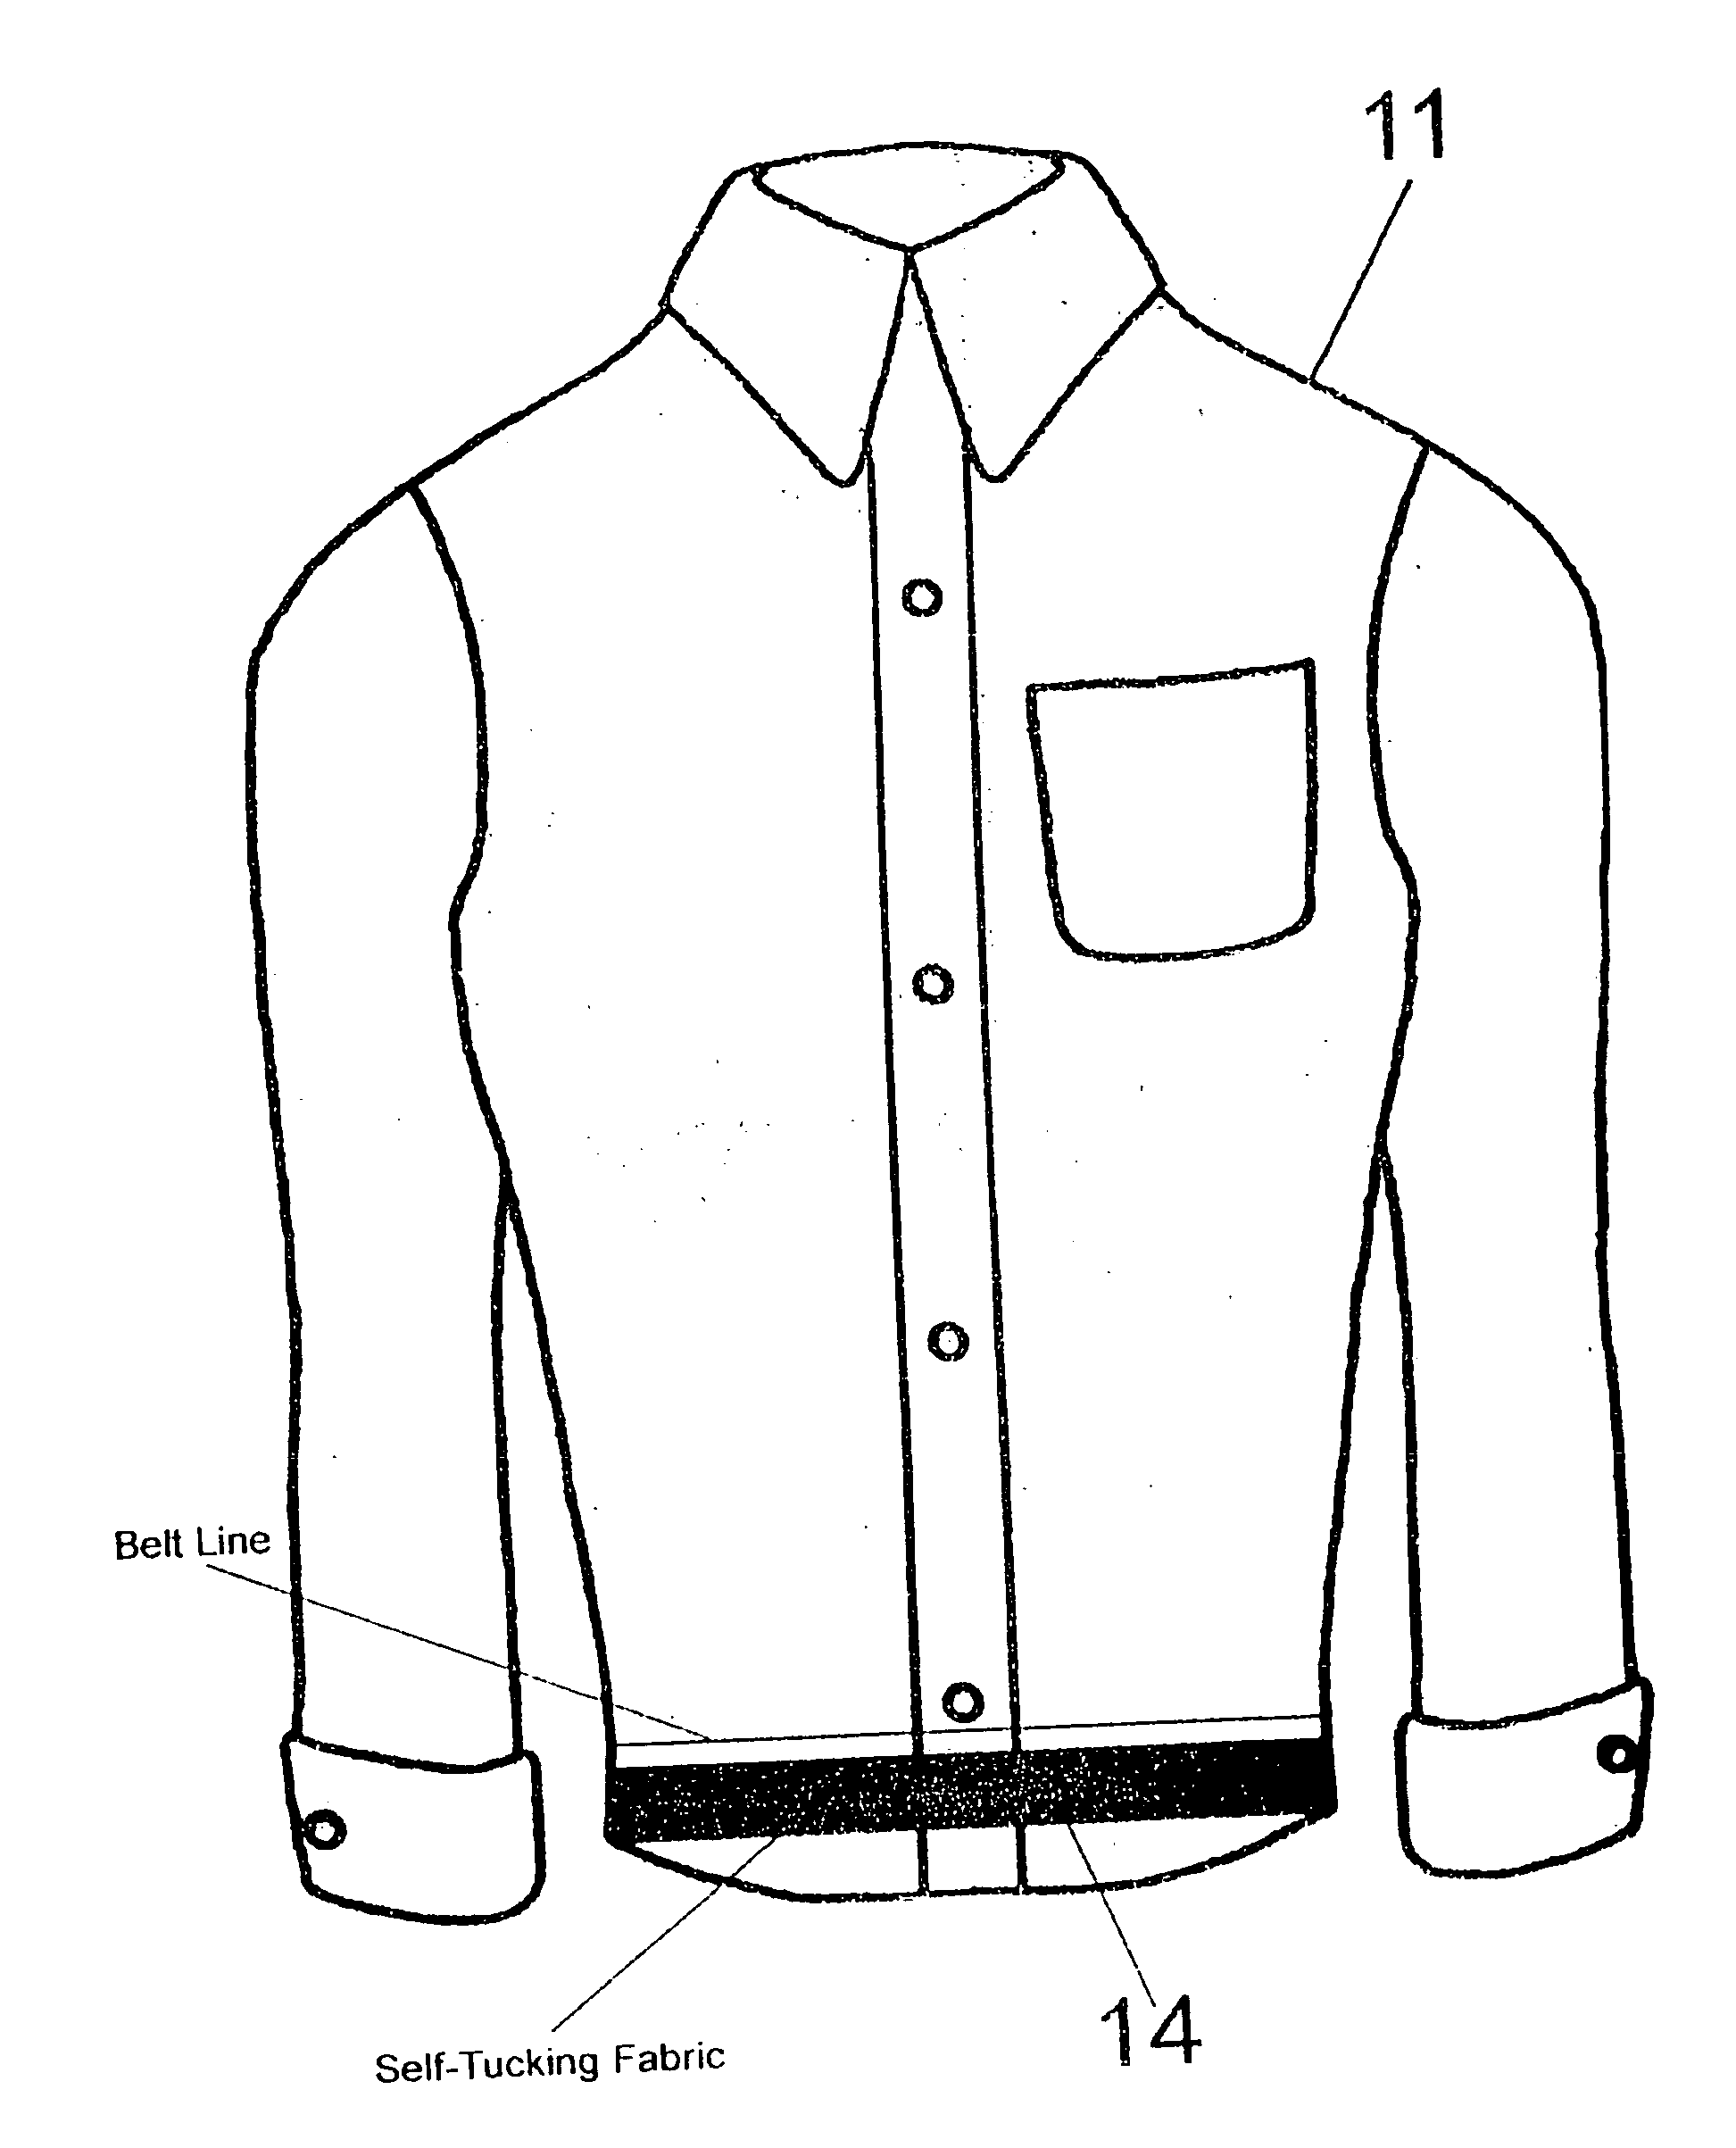 Self-tucking shirt mechanism